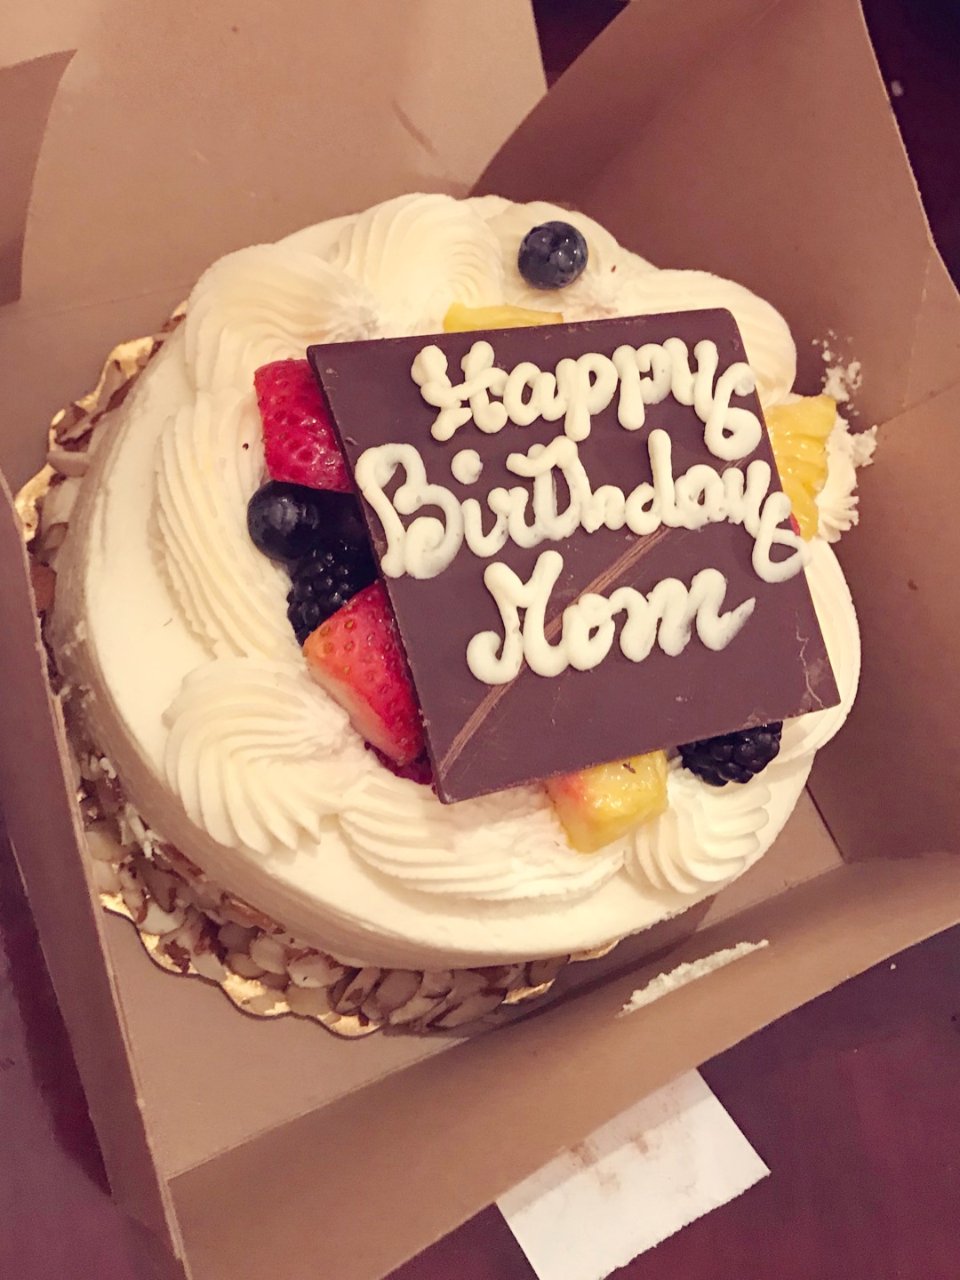 Whole Foods,birthday cake